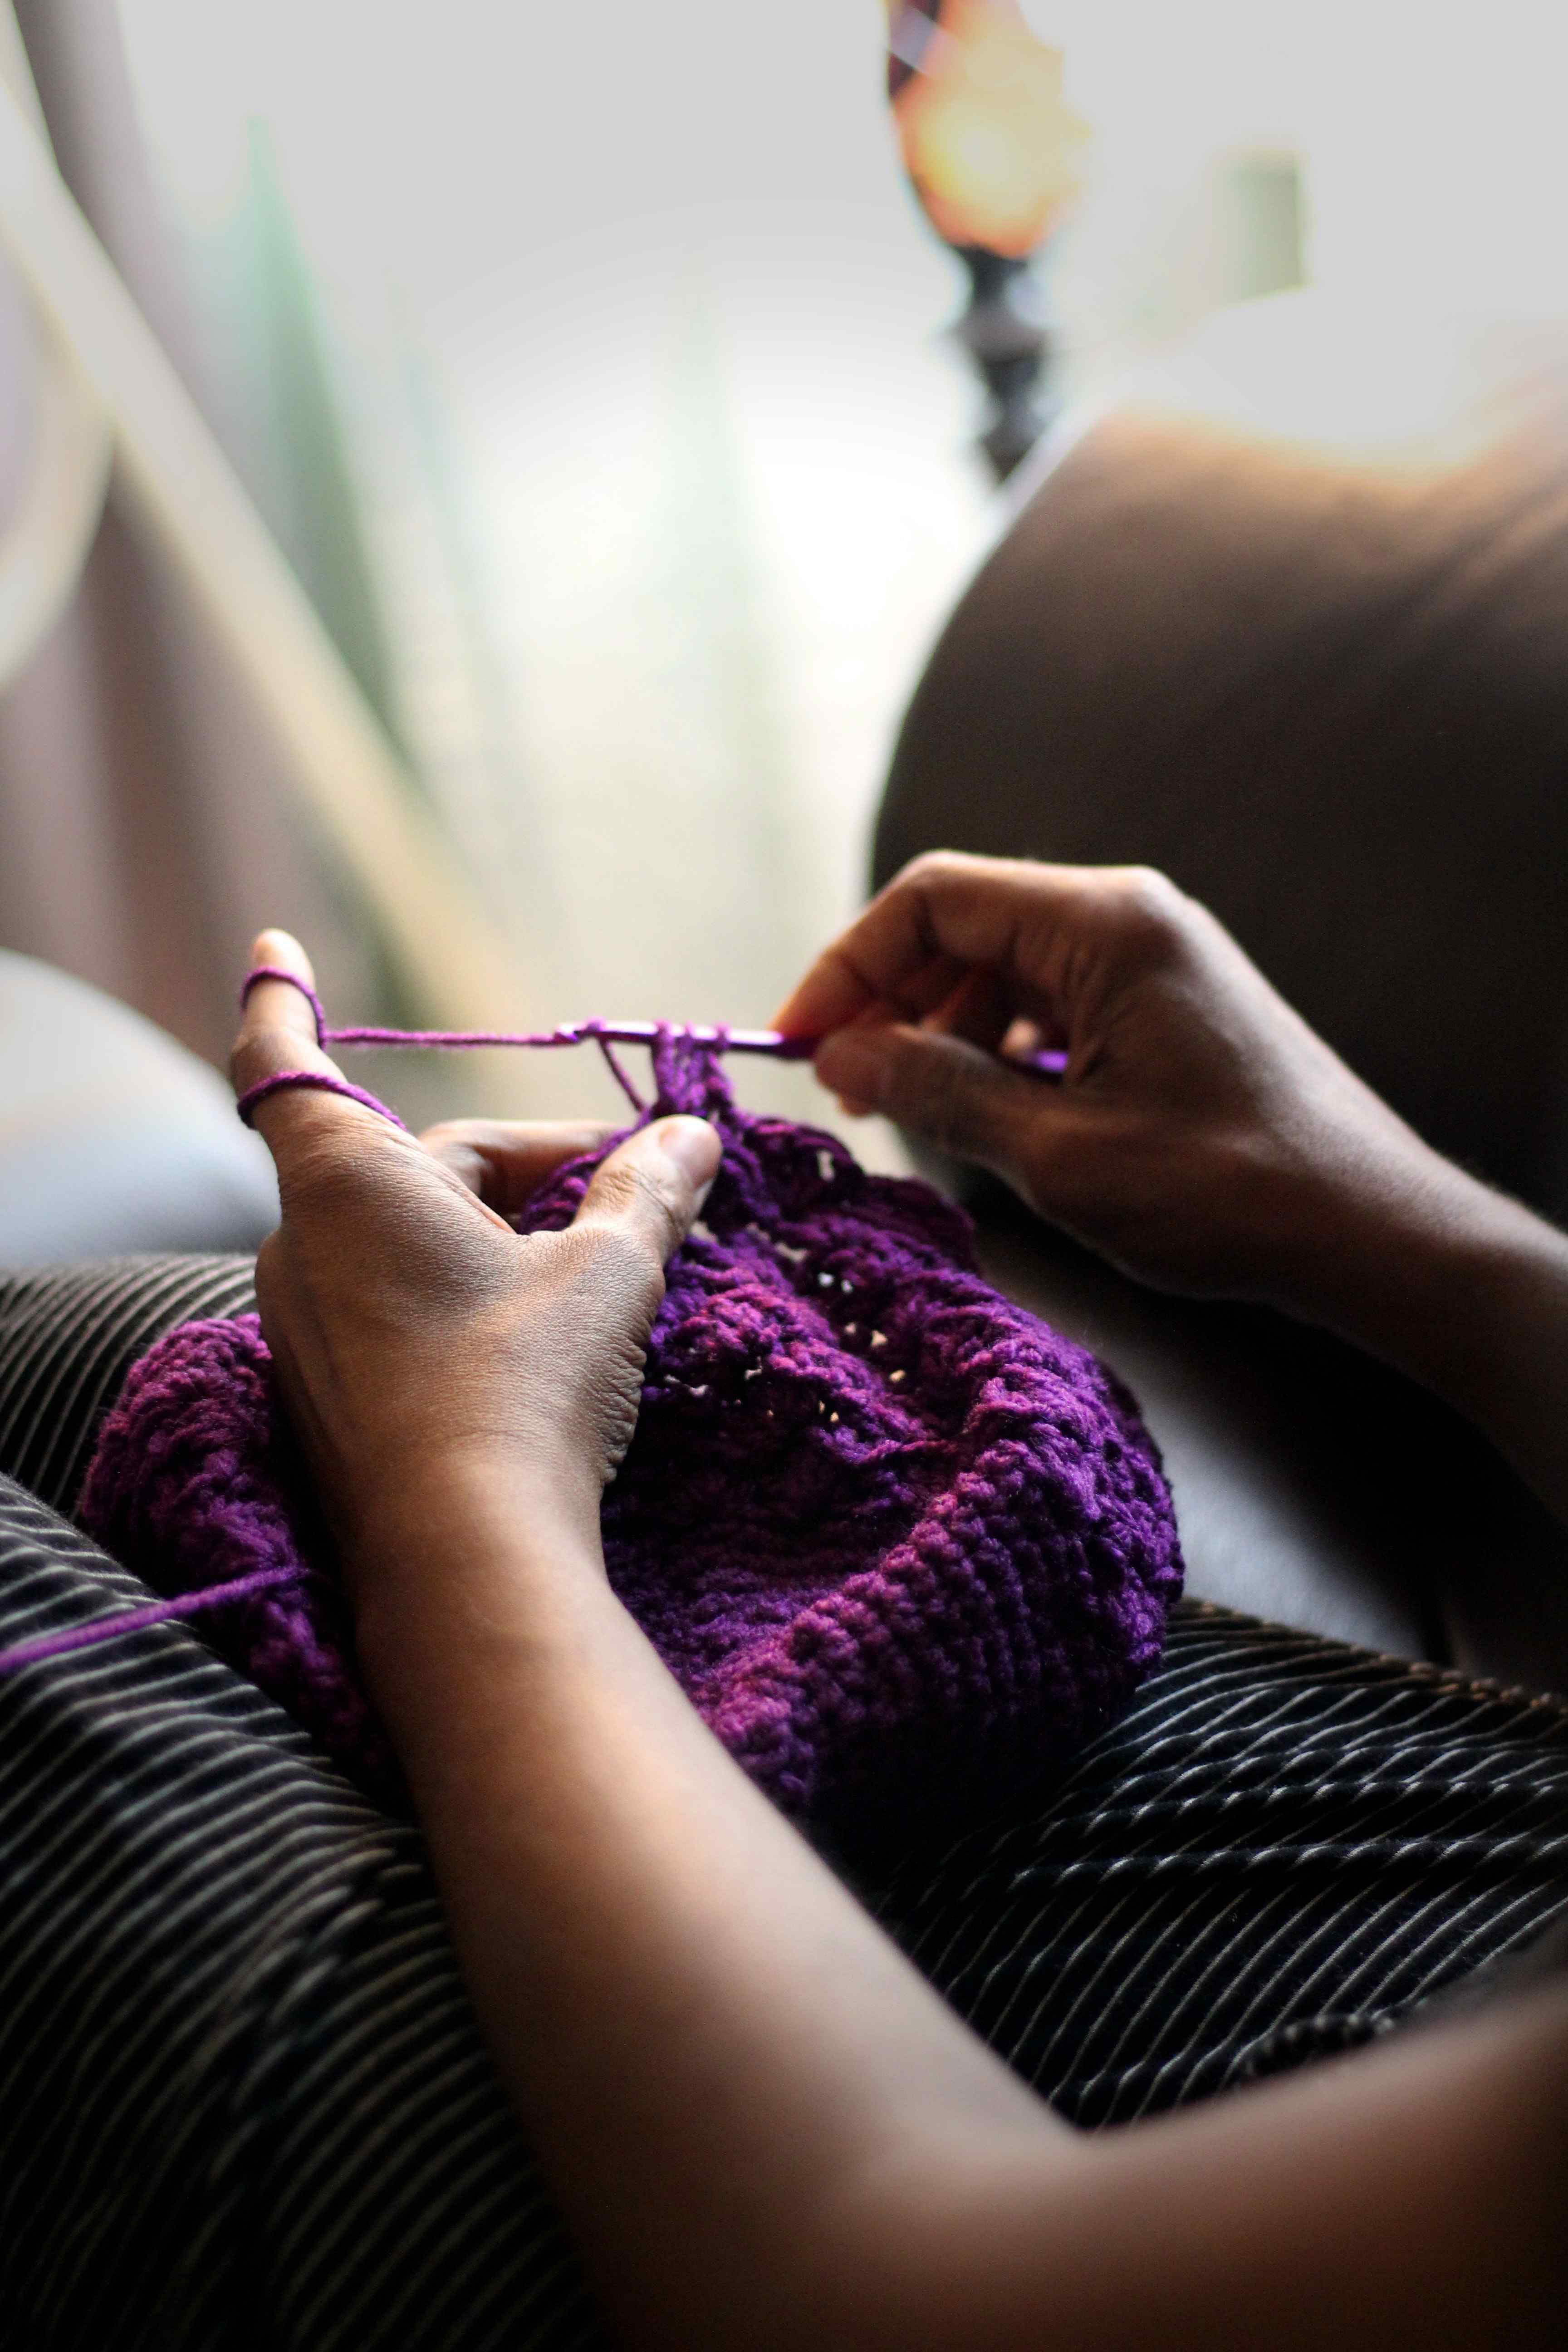 Crochet for complete beginners - Online